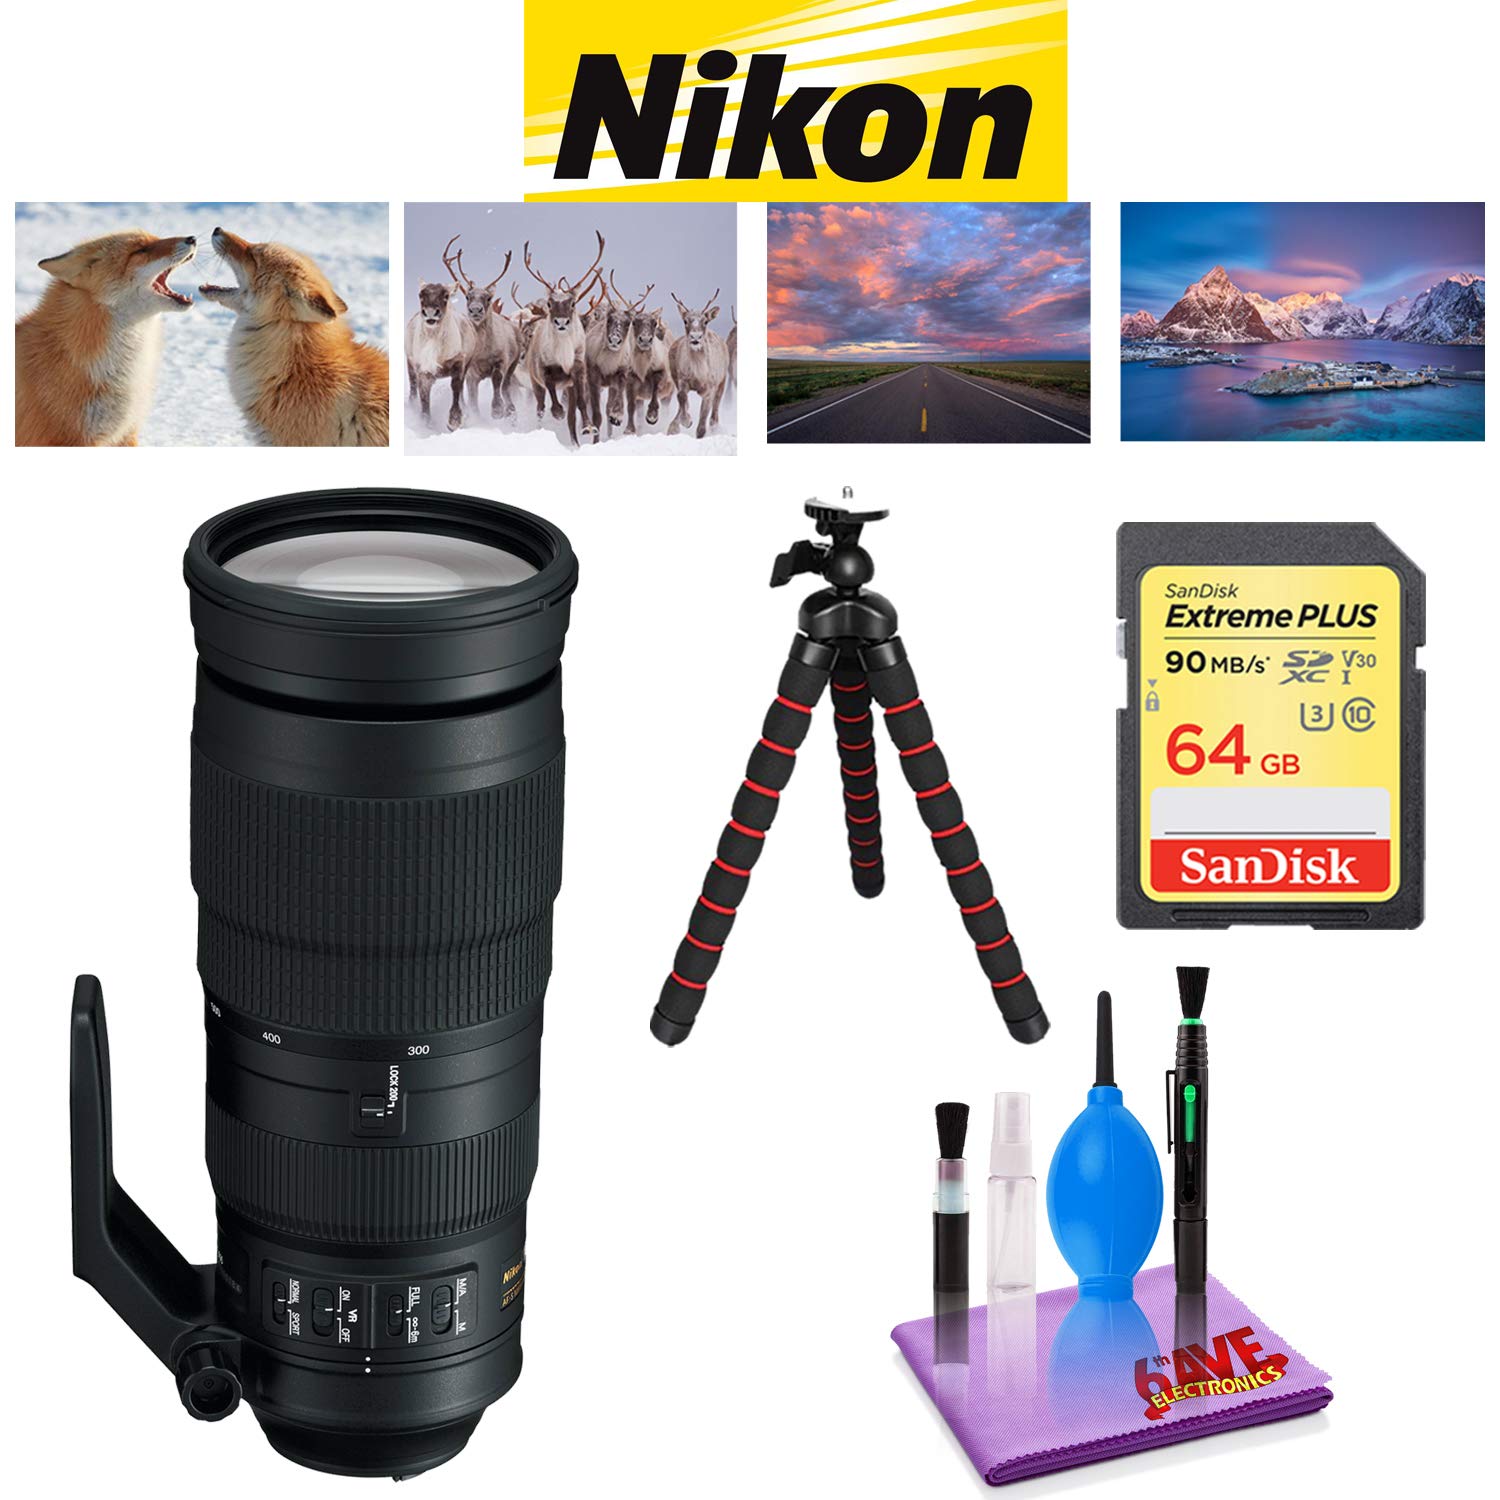 Nikon AF-S NIKKOR 200-500mm f/5.6E ED VR Lens with Sandisk 64 GB Memory Card, Deluxe Backpack for Camera + Video and 12